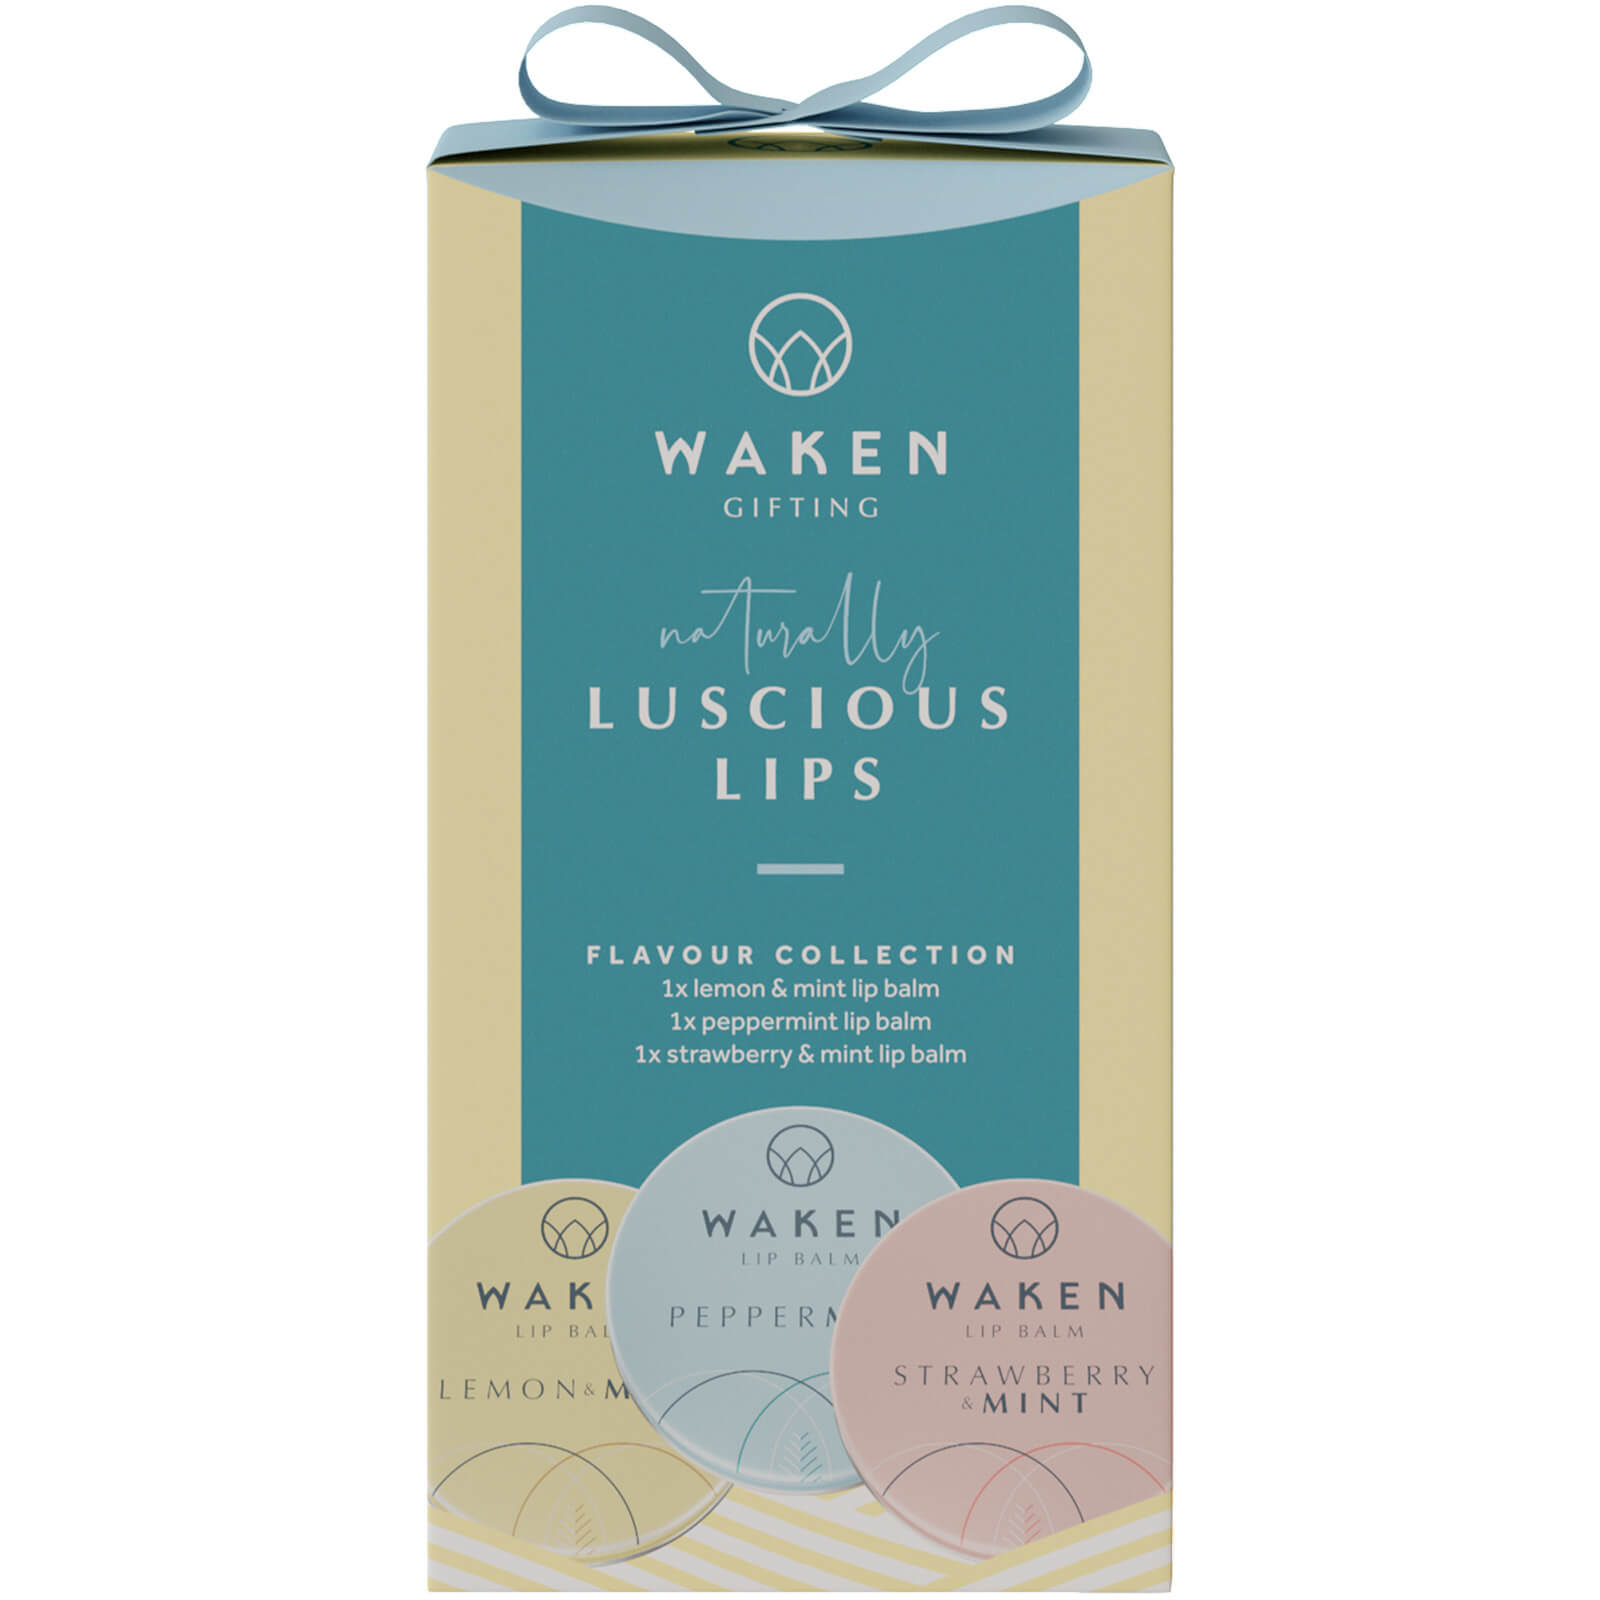 Waken Gift 1 – Luscious Lips 204g lookfantastic.com imagine